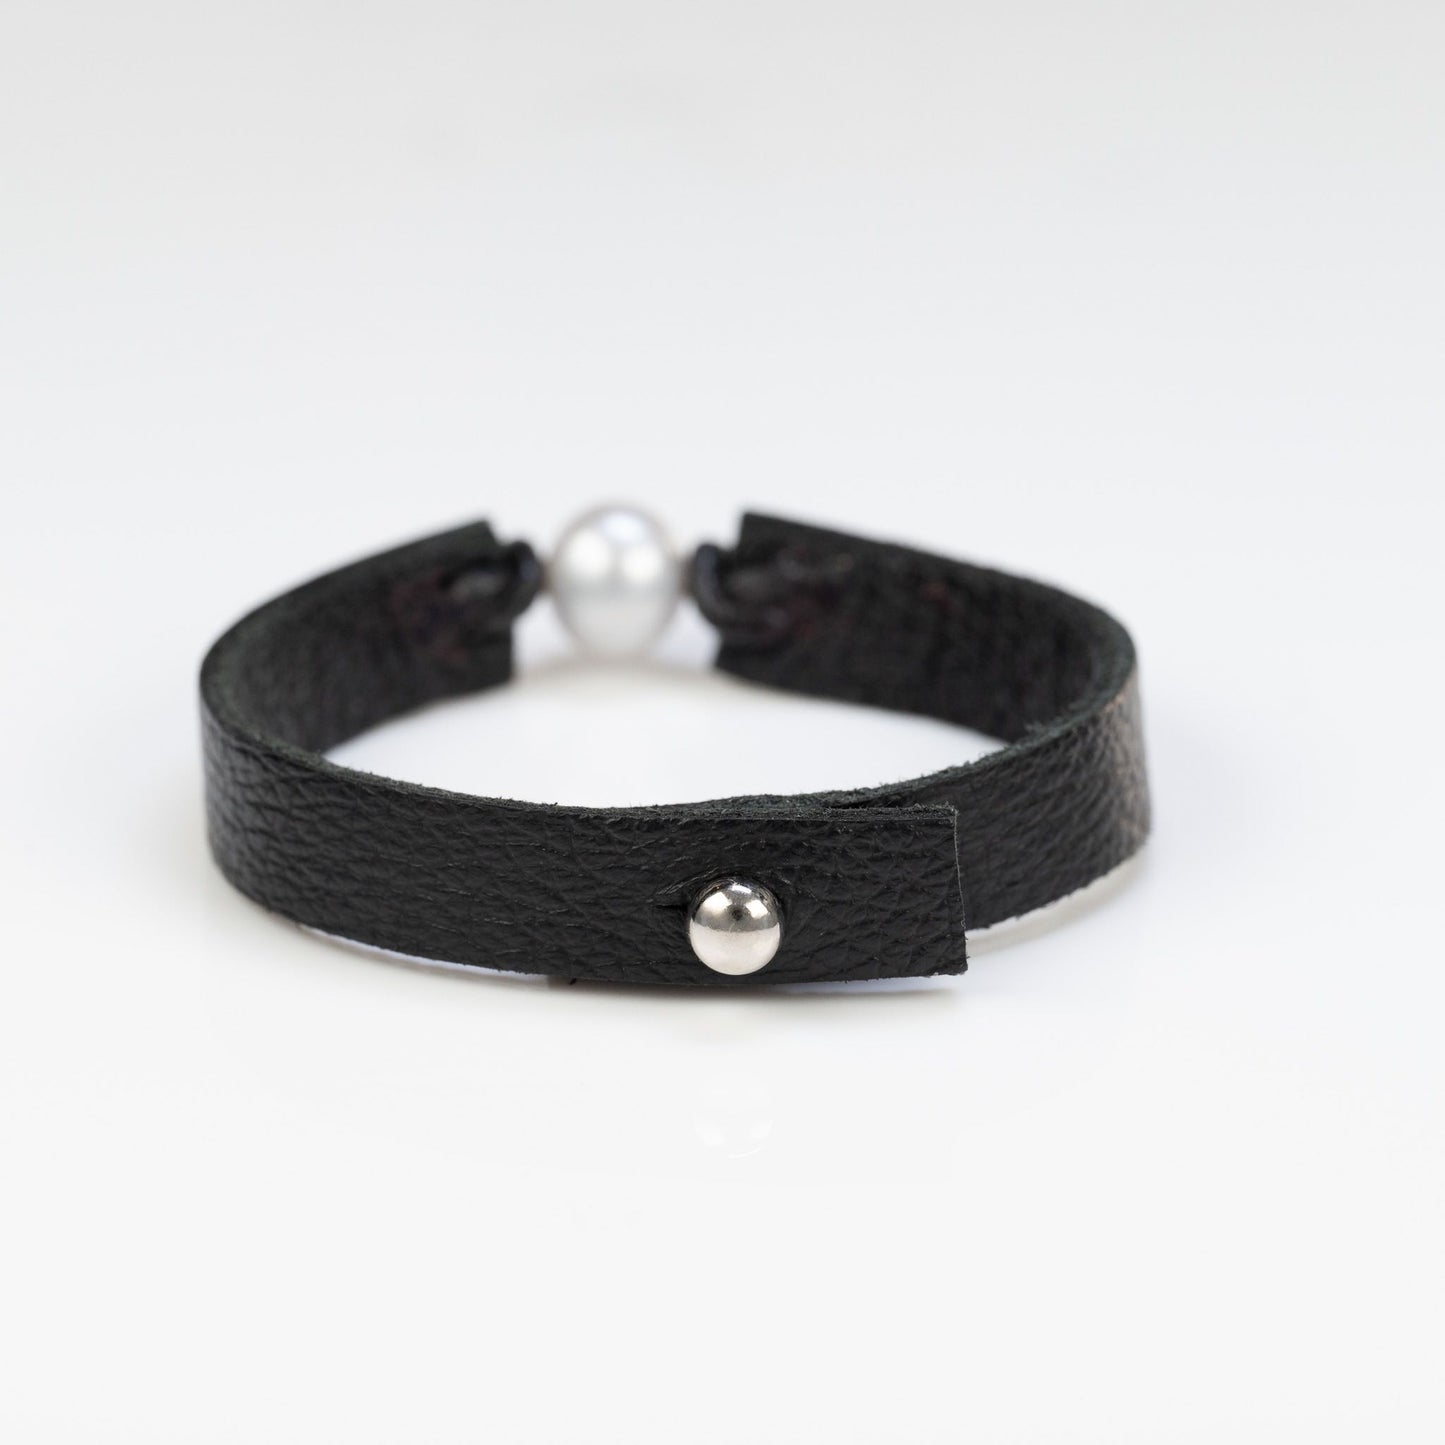 Pearl Drop Black Leather Bracelet